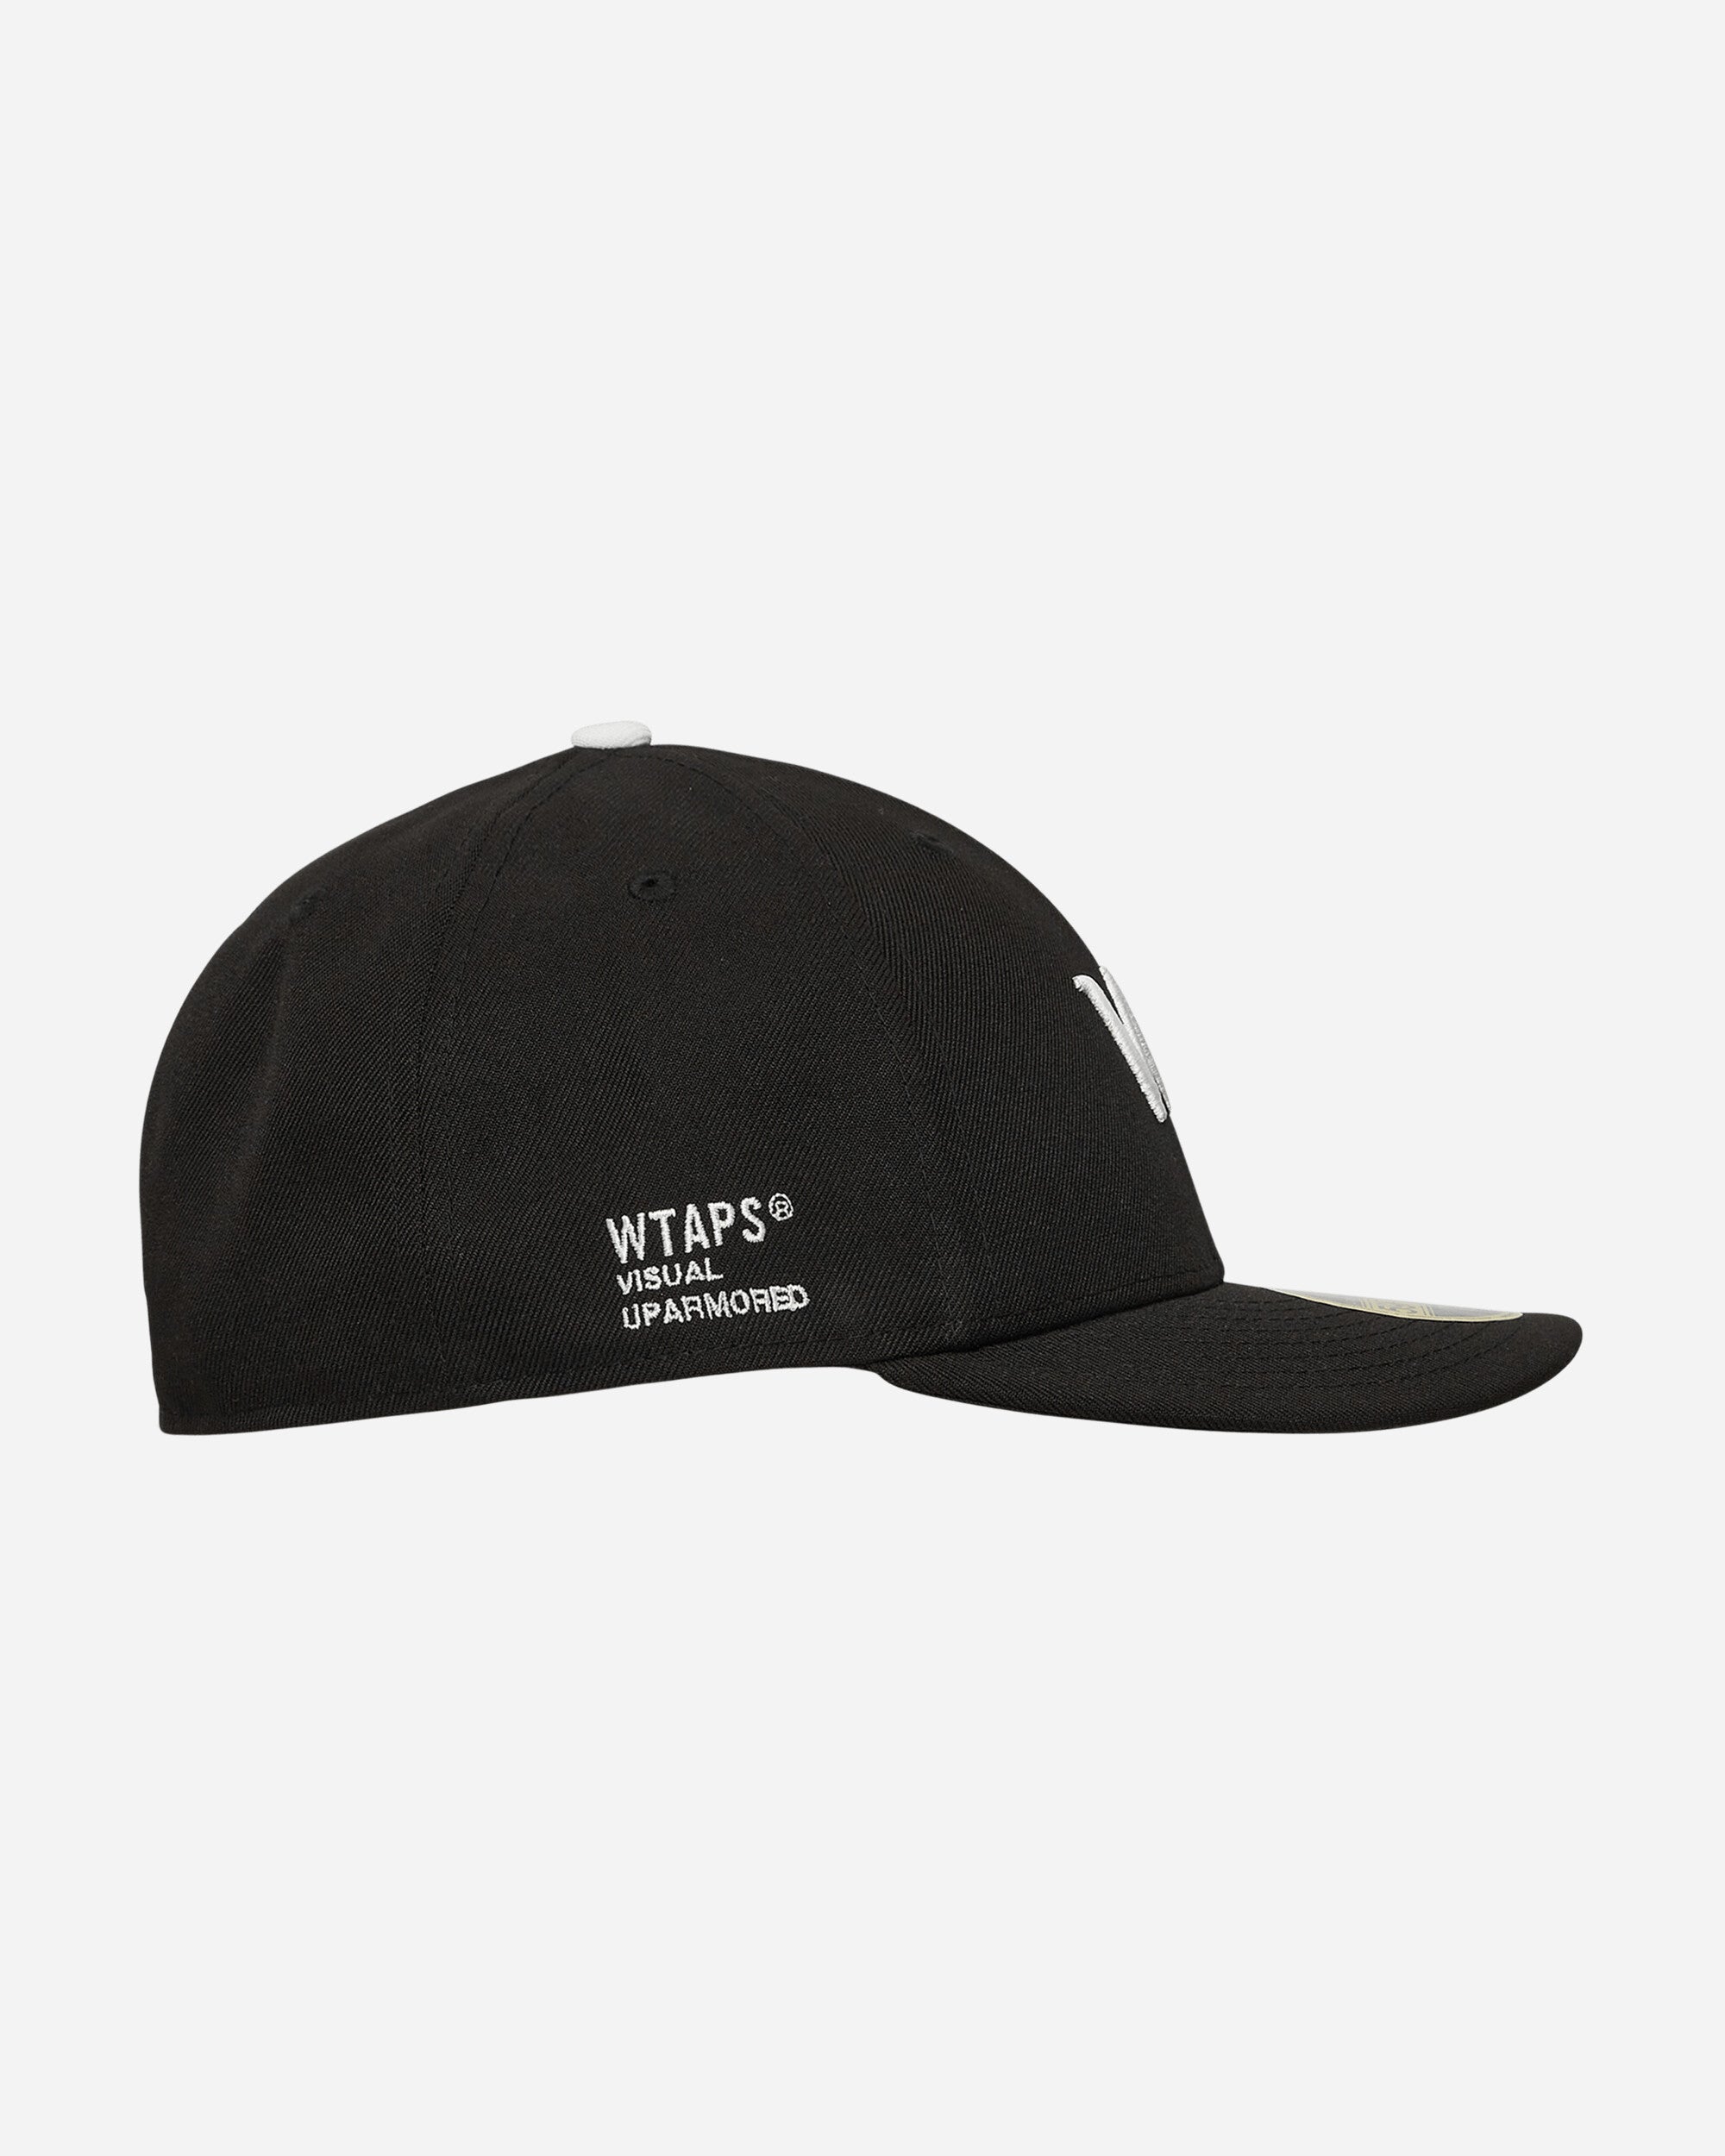 New Era 59fifty Low Profile Cap In Black